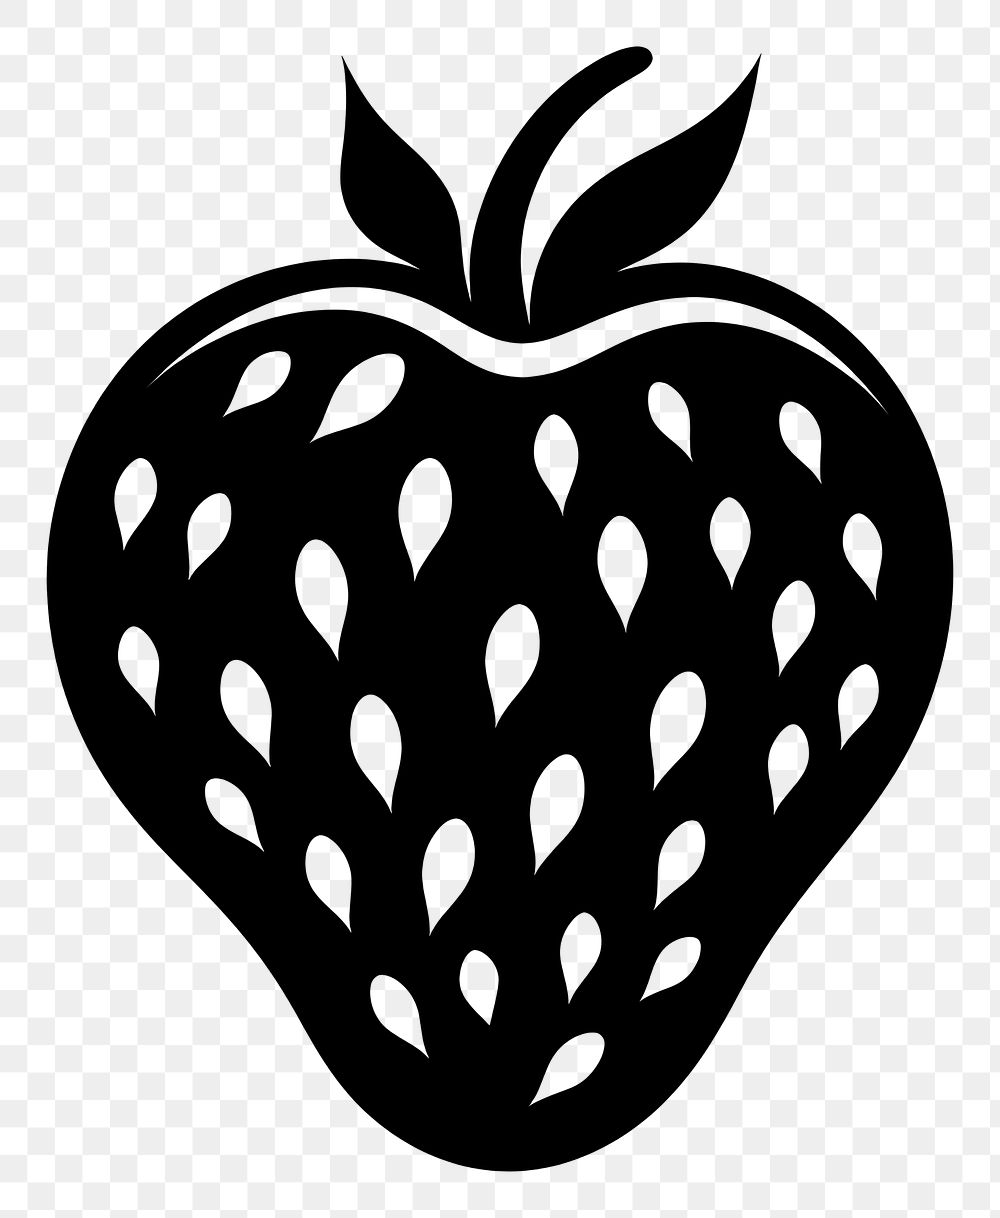 PNG Strawberry fruit logo icon black plant food